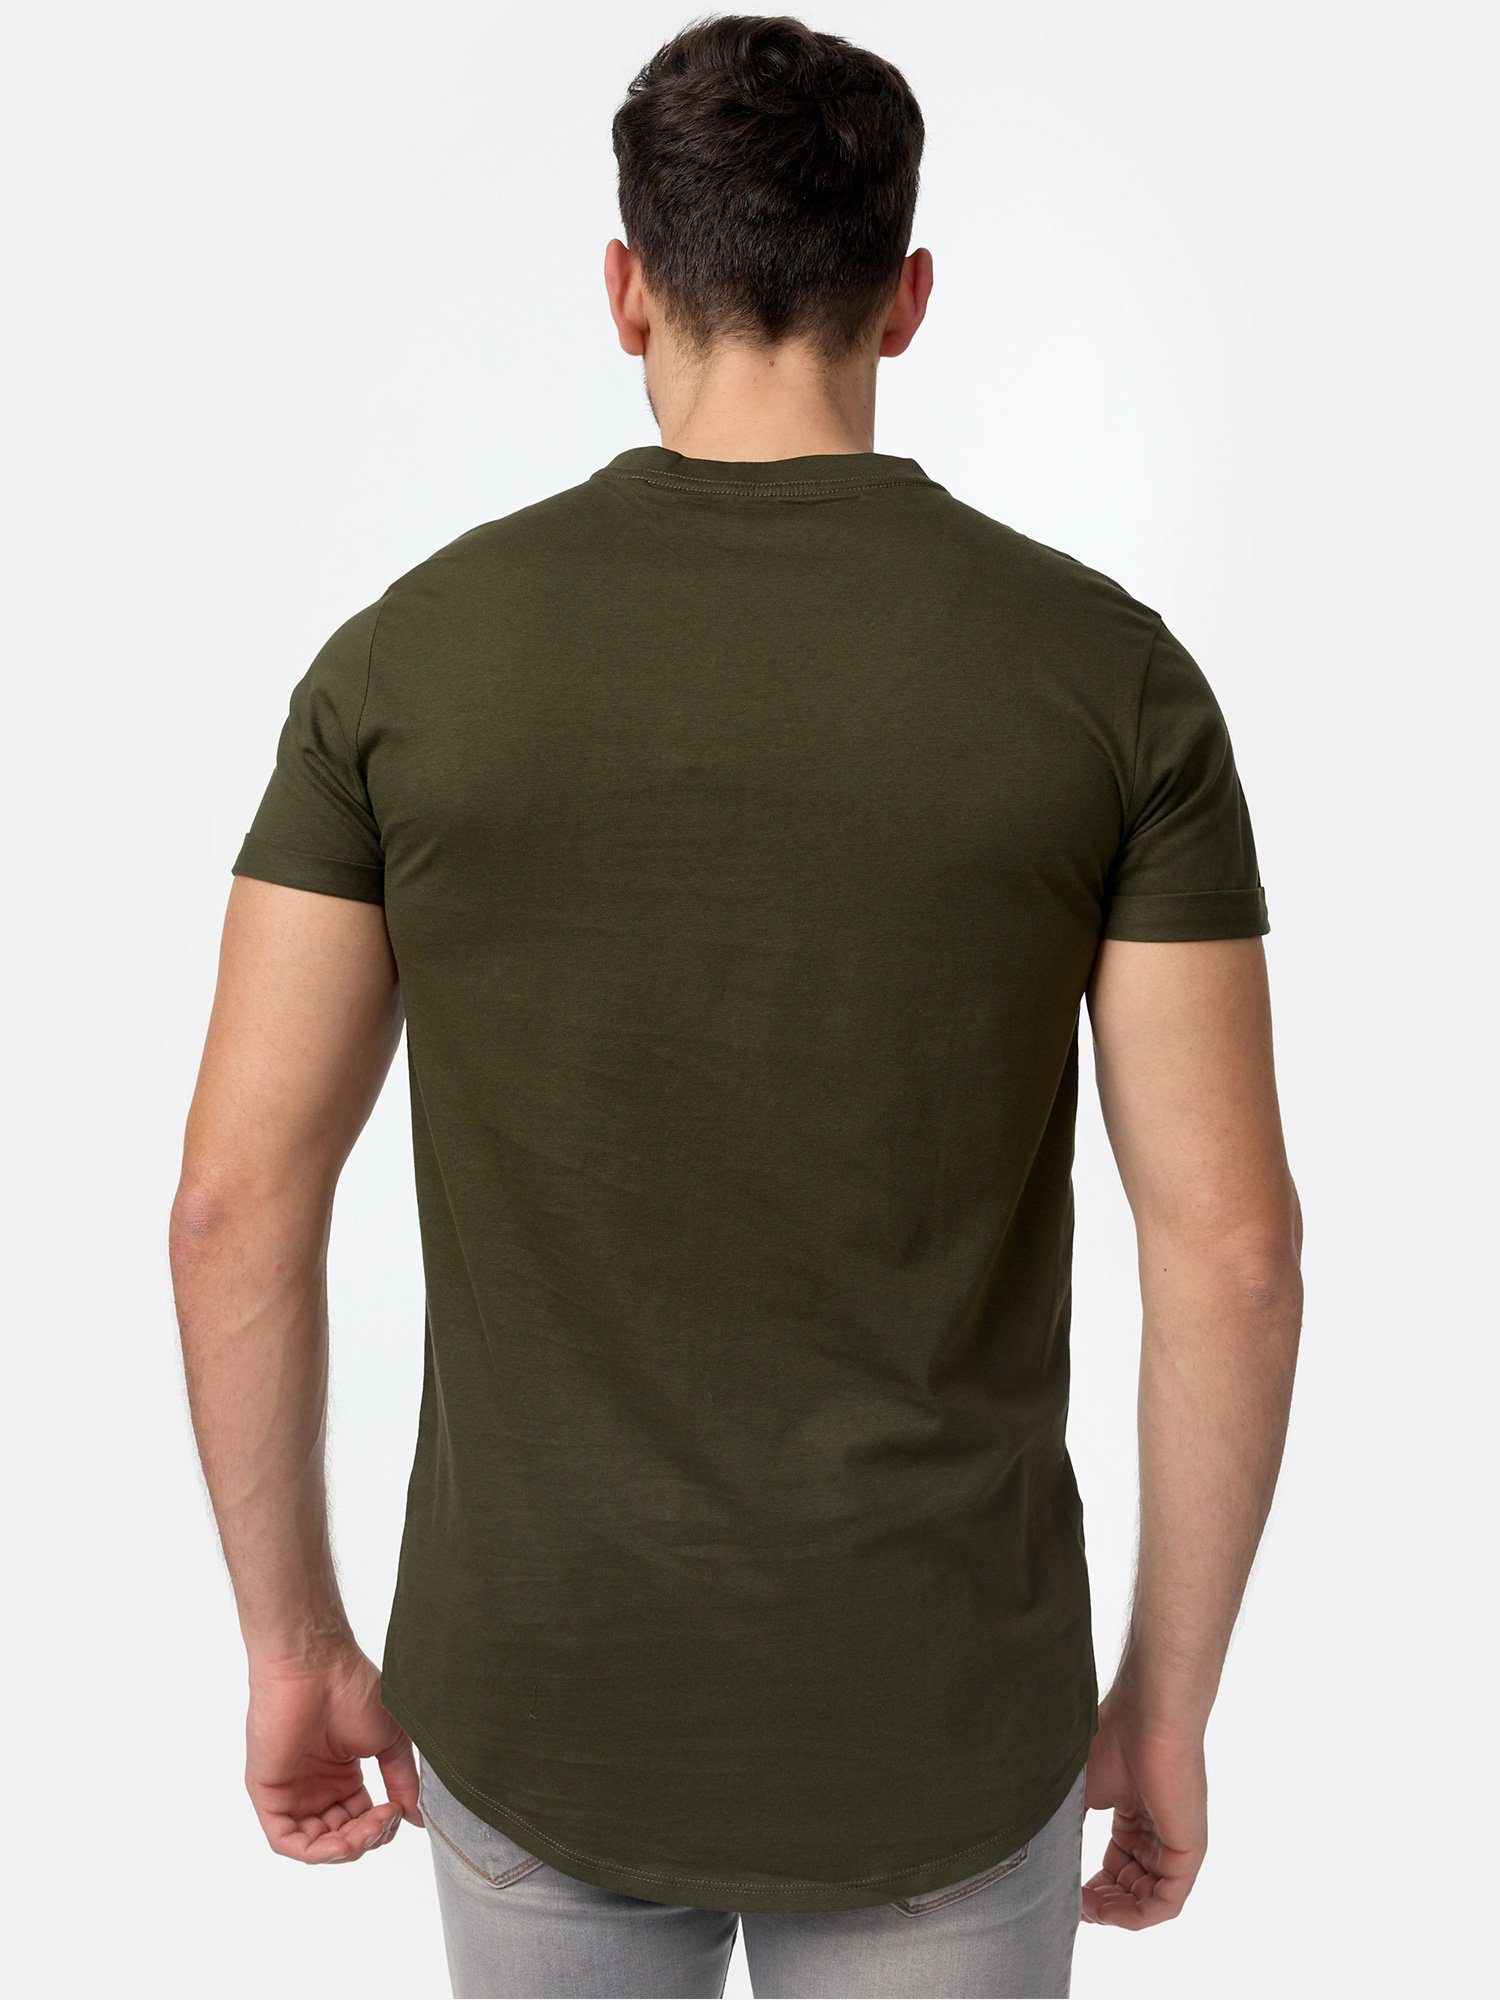 Tazzio T-Shirt Basic E105 khaki Herren Rundhalsshirt